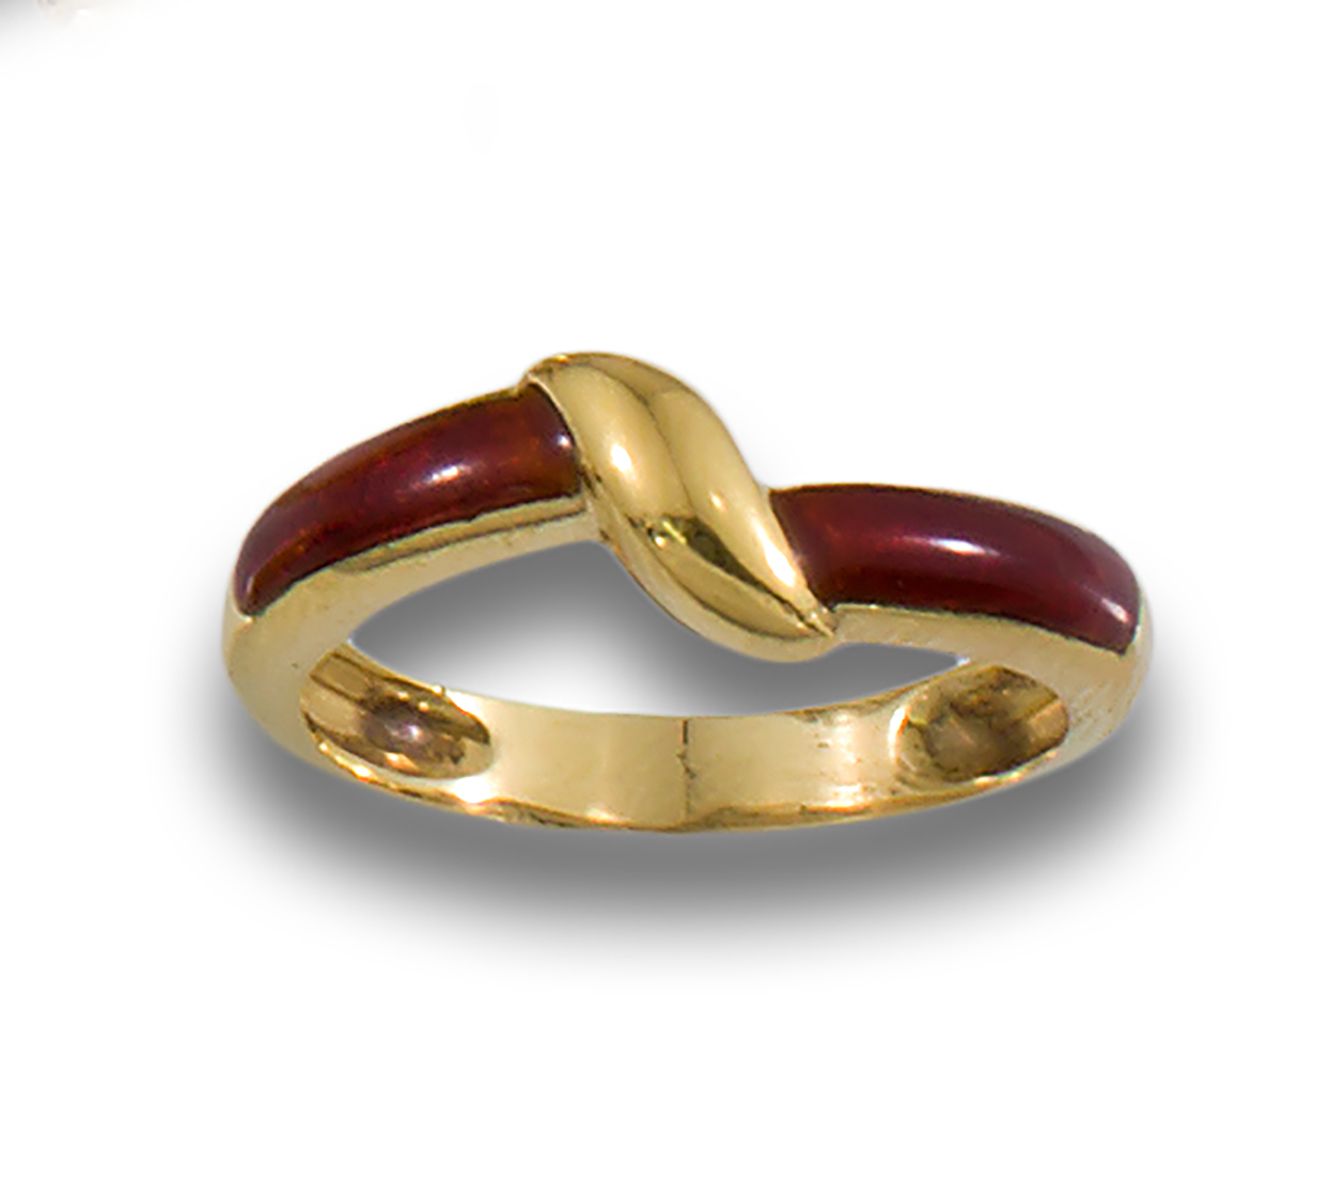 GOLD RING WITH BURGUNDY ENAMEL ARMS Ring aus 18kt Gelbgold, Arm mit feiner borde&hellip;